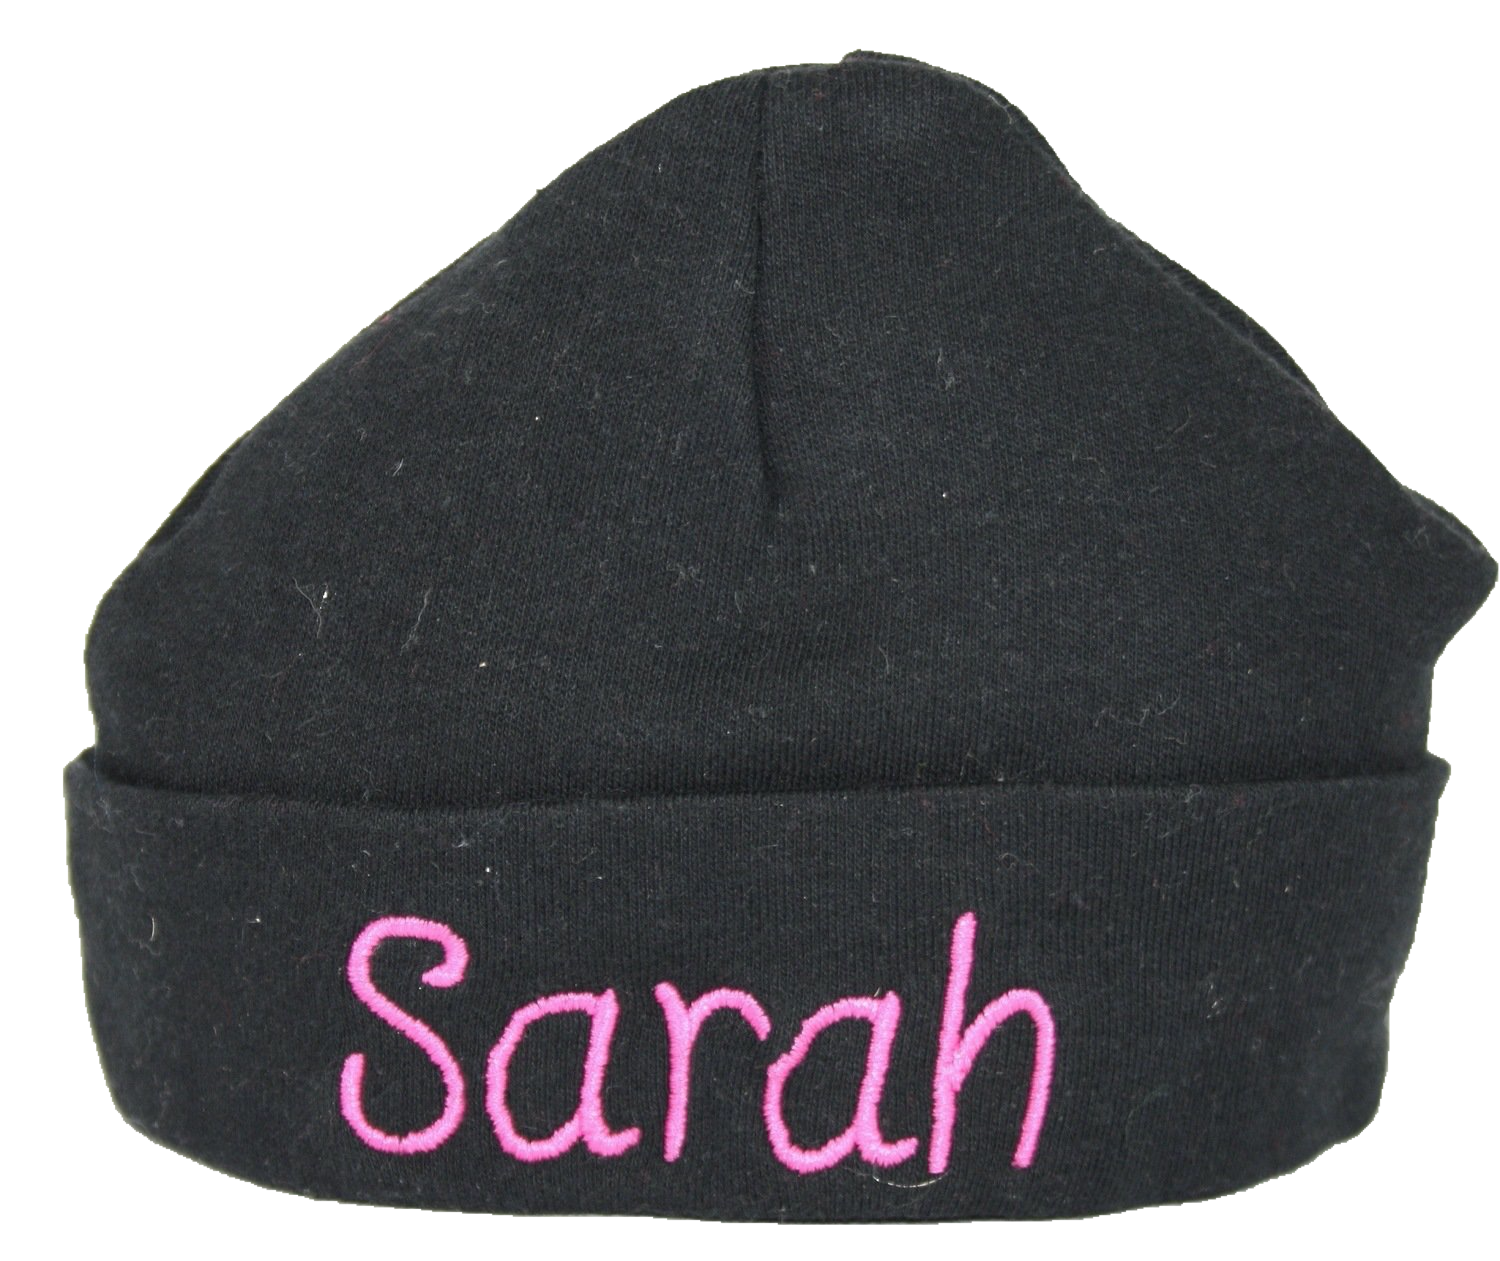 Black baby hat